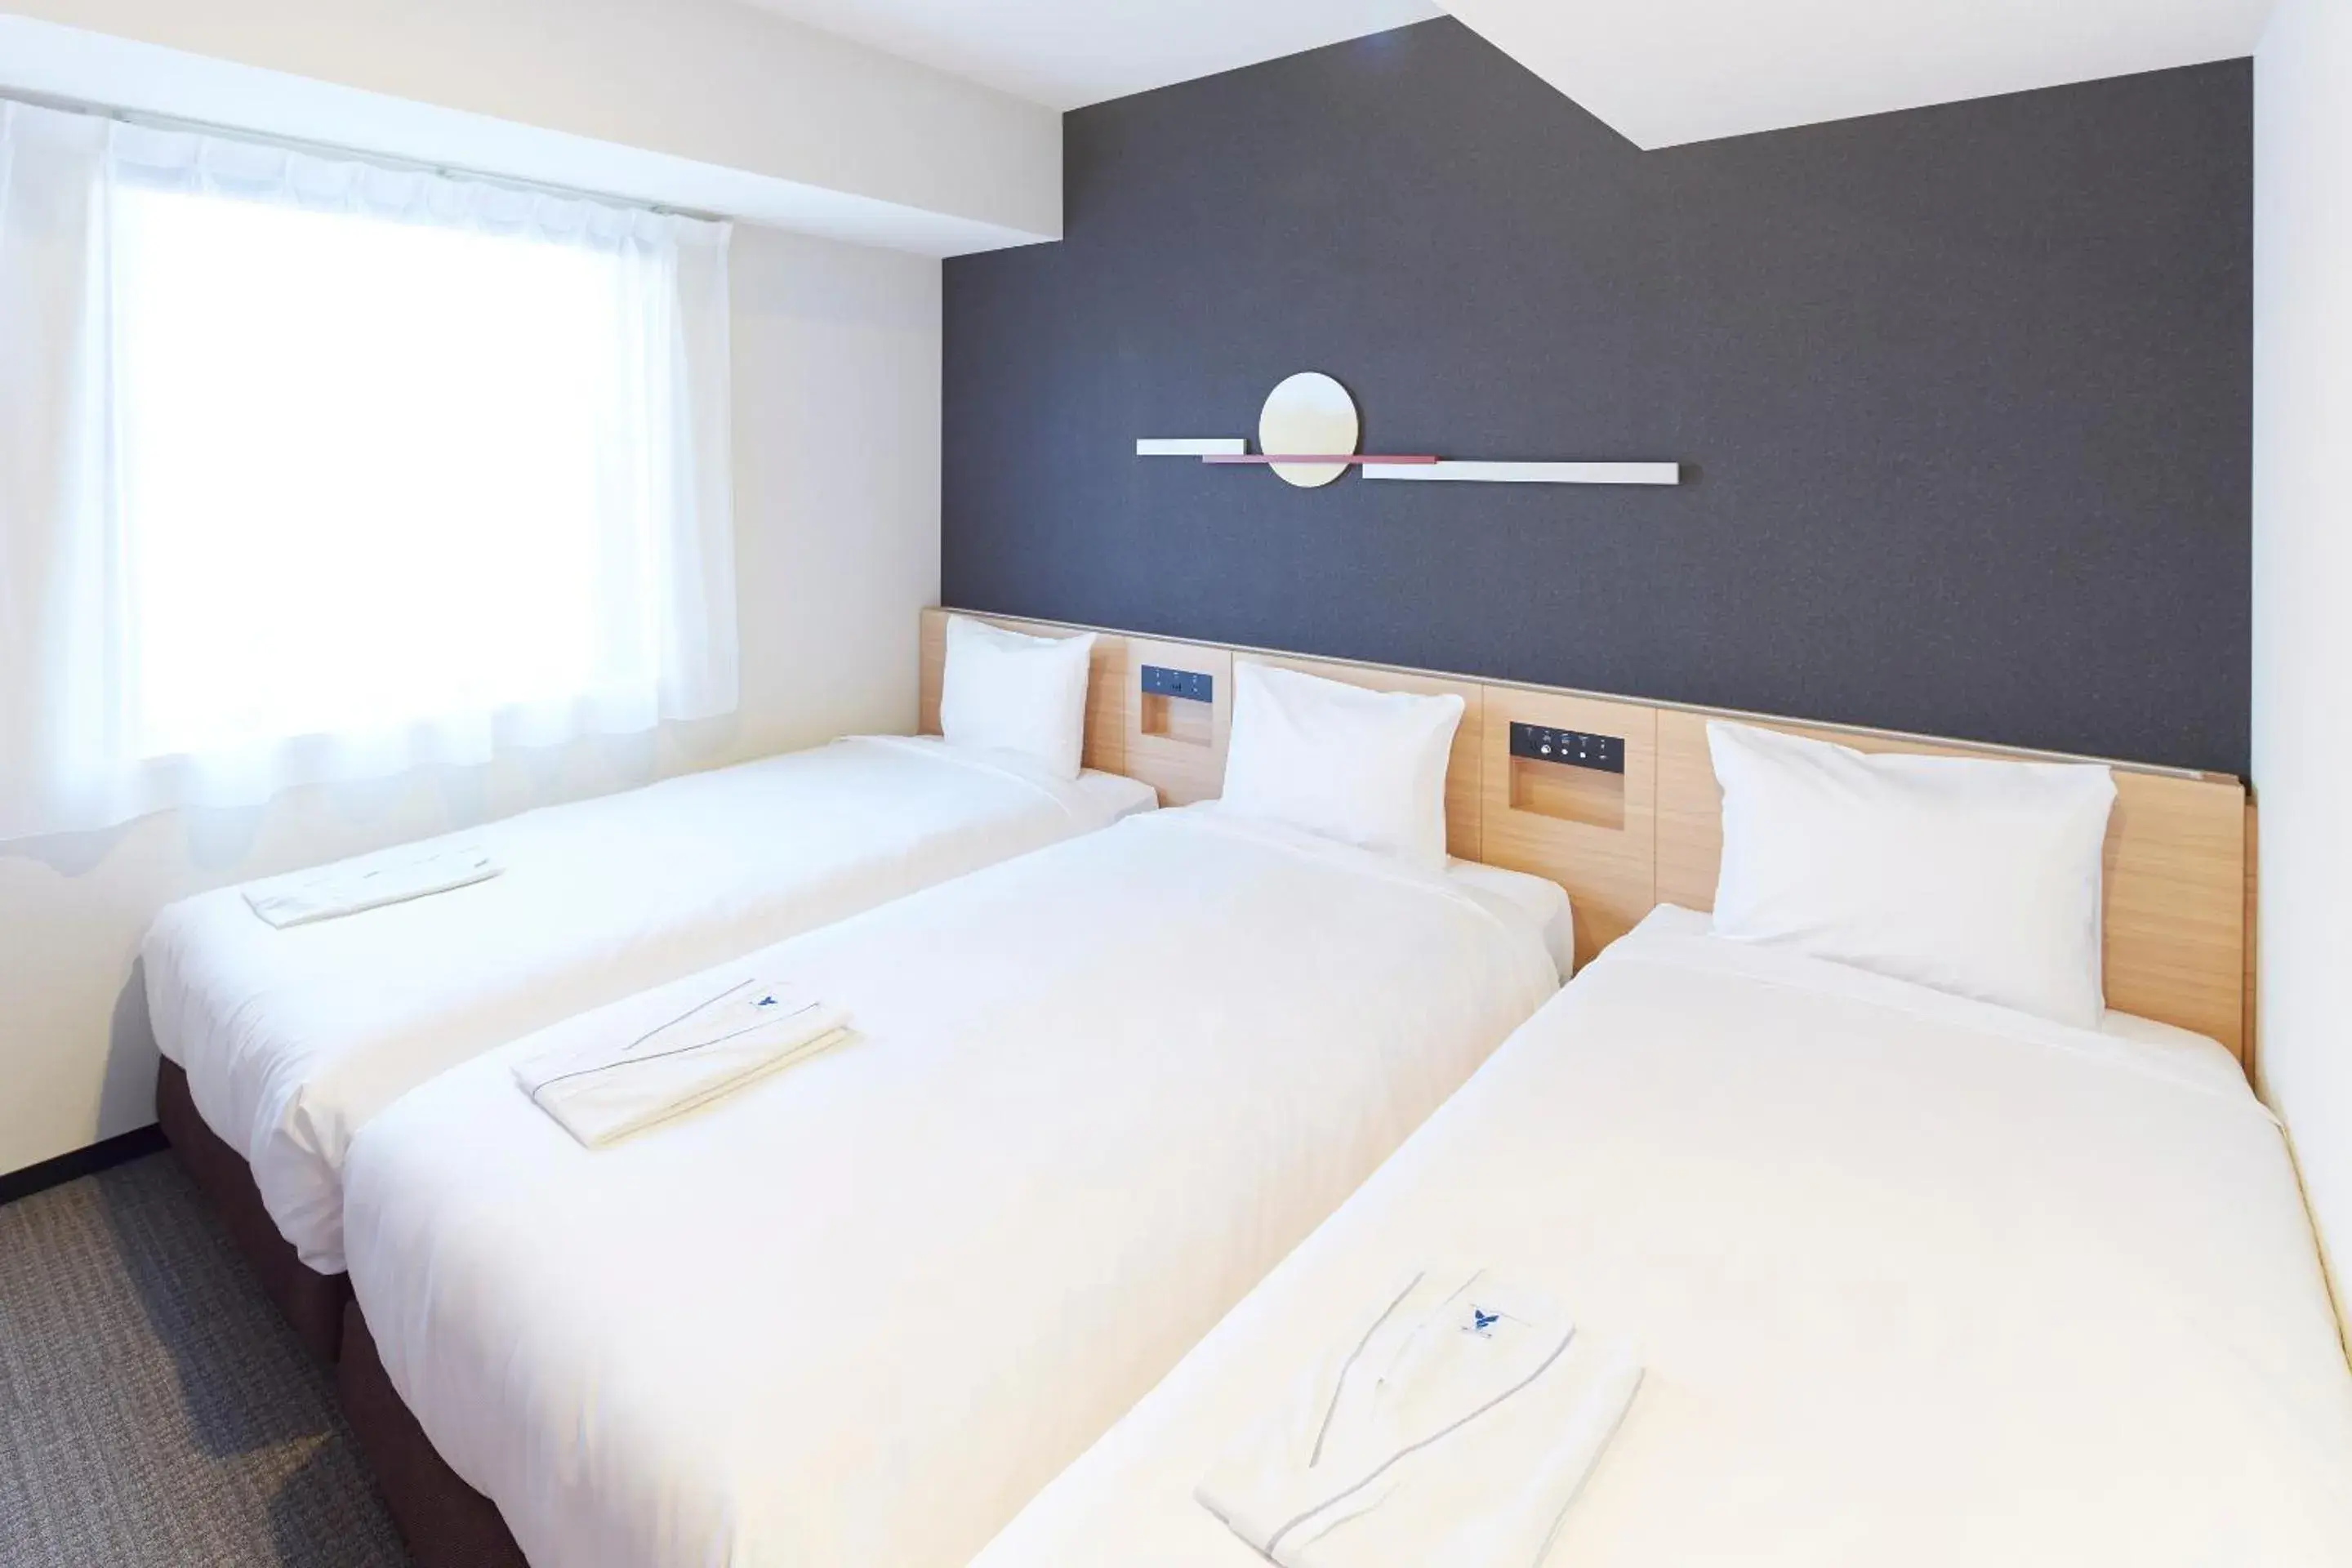 Bed in hotel MONday Tokyo Nishikasai